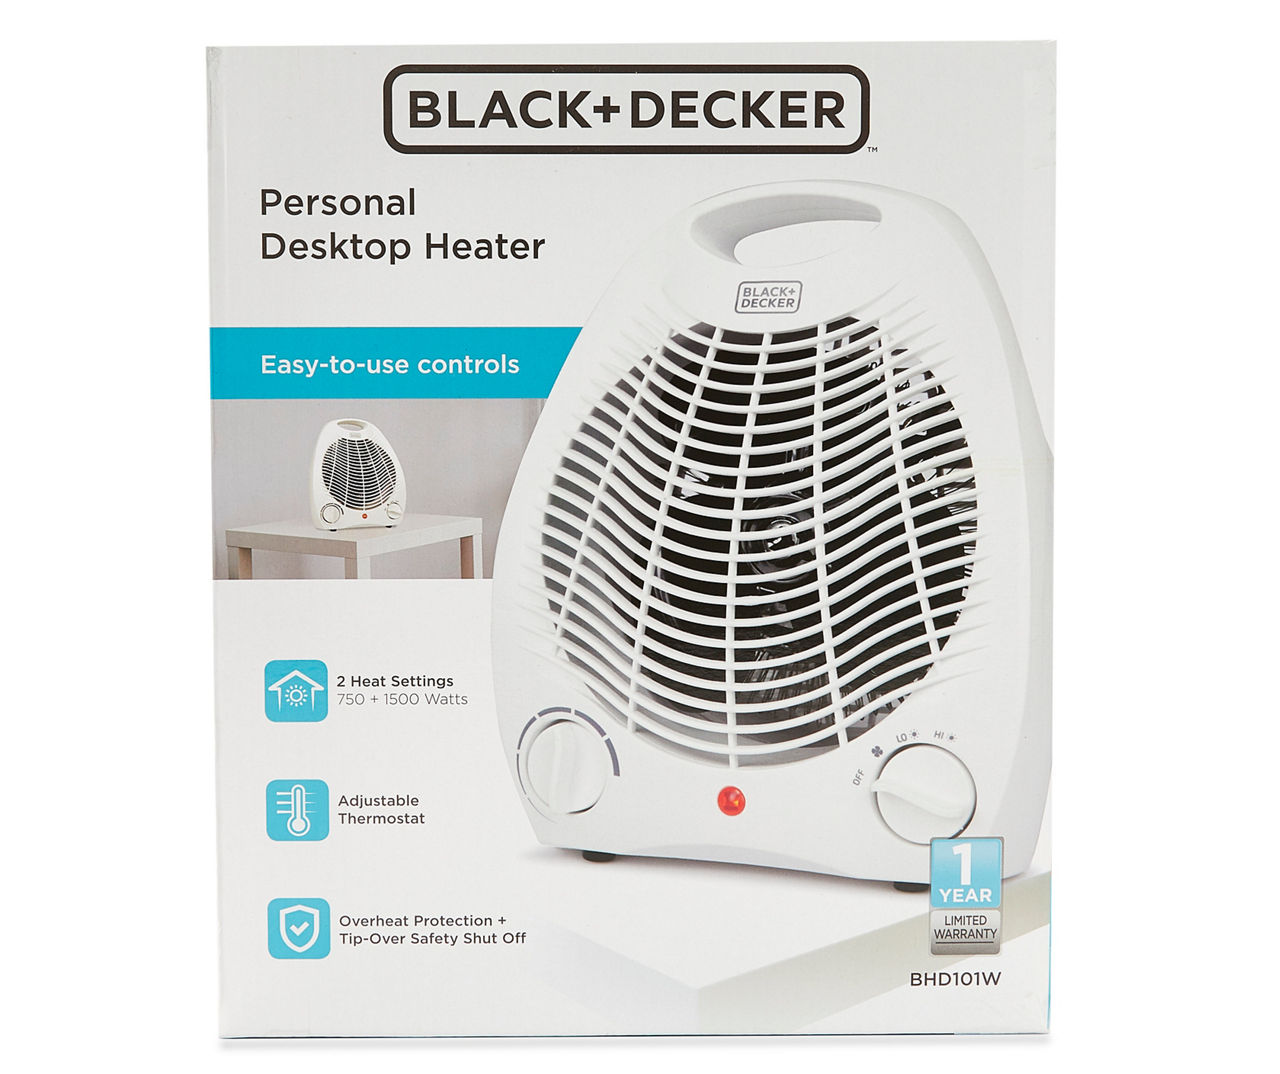 Black + Decker White Personal Desktop Heater